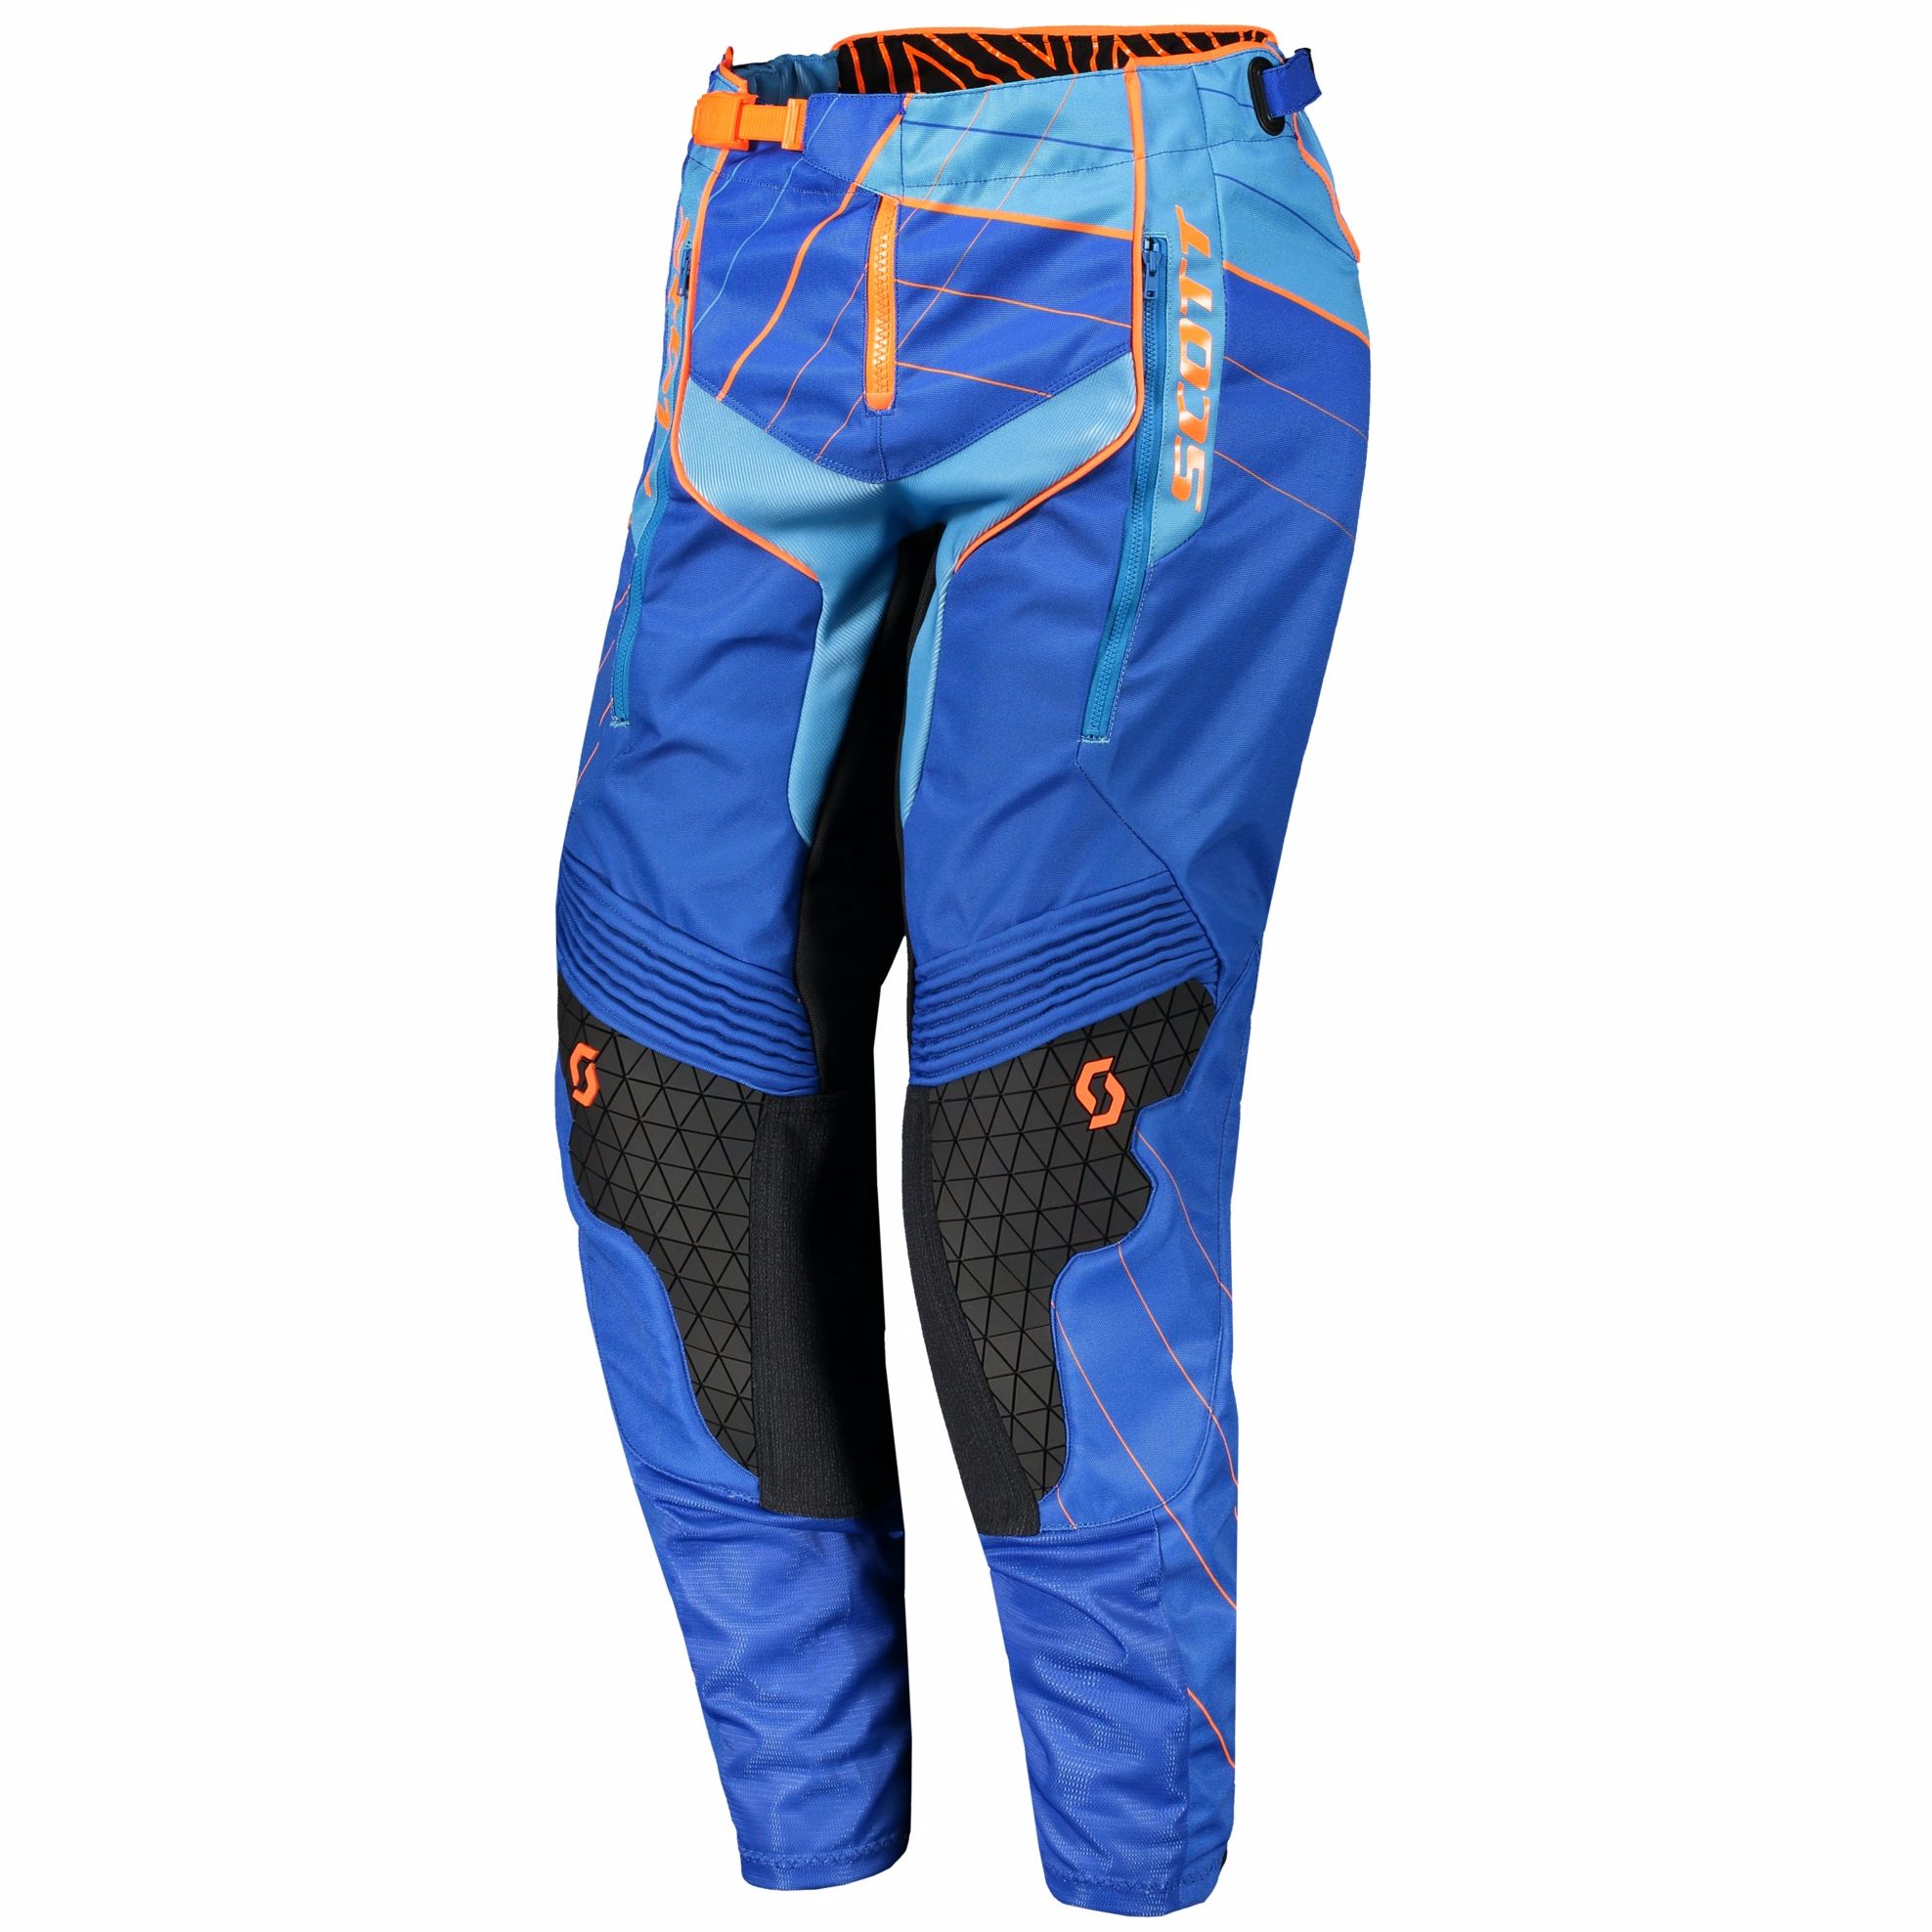 Pantalon Cross Scott Enduro - Bleu Orange -